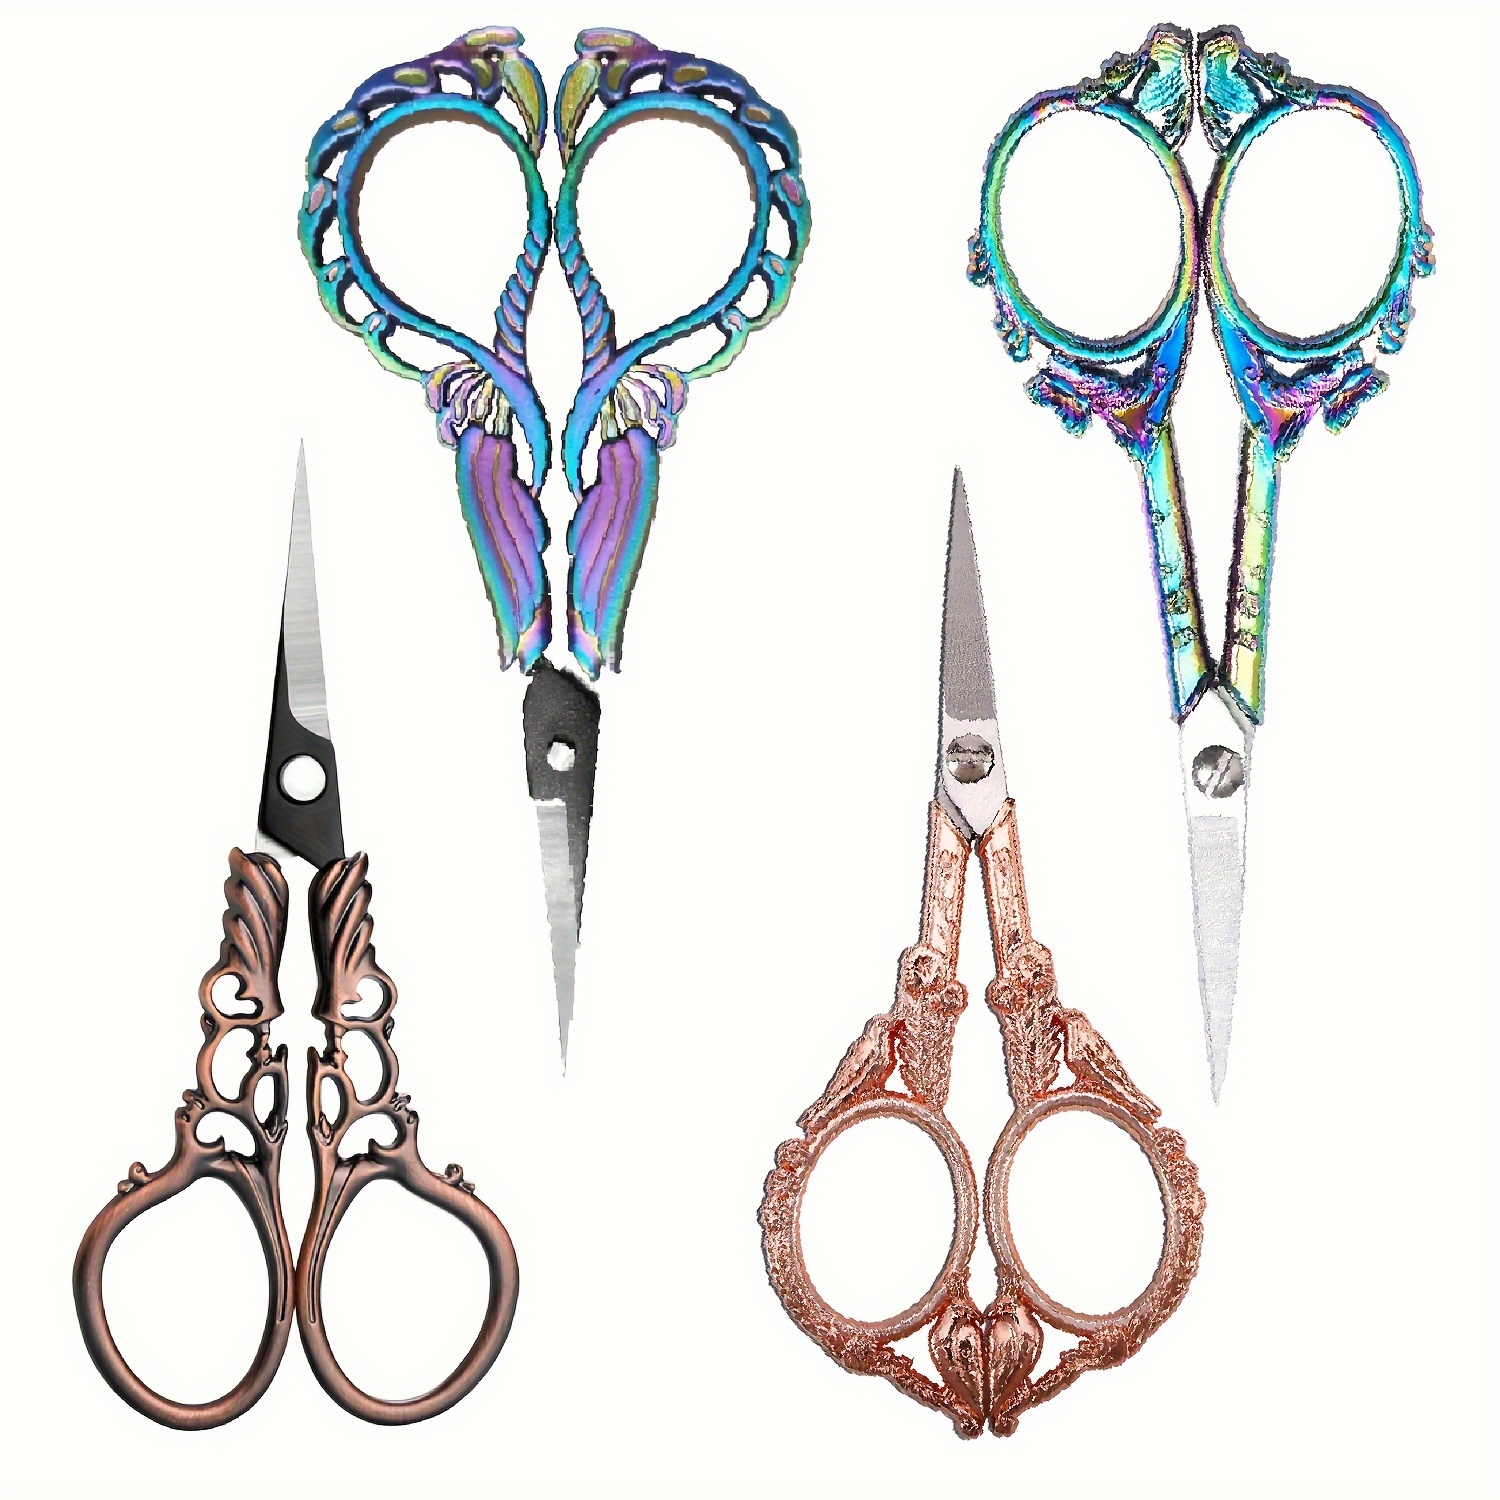 Mudder Loop Scissors Colorful Grip Scissors Loop Handle Self-Opening  Scissors Adaptive Cutting Scissors for Children and Adults